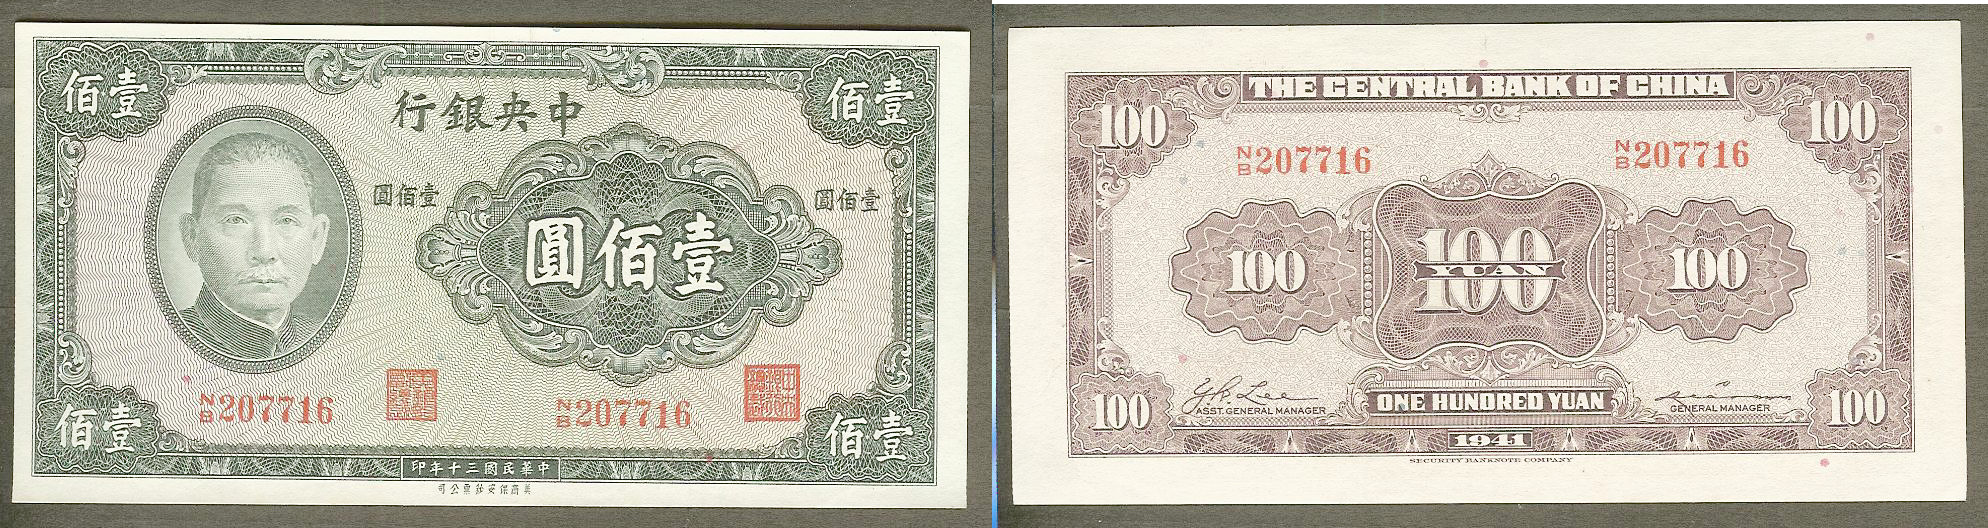 China 100 yuan 1941  P243a Unc